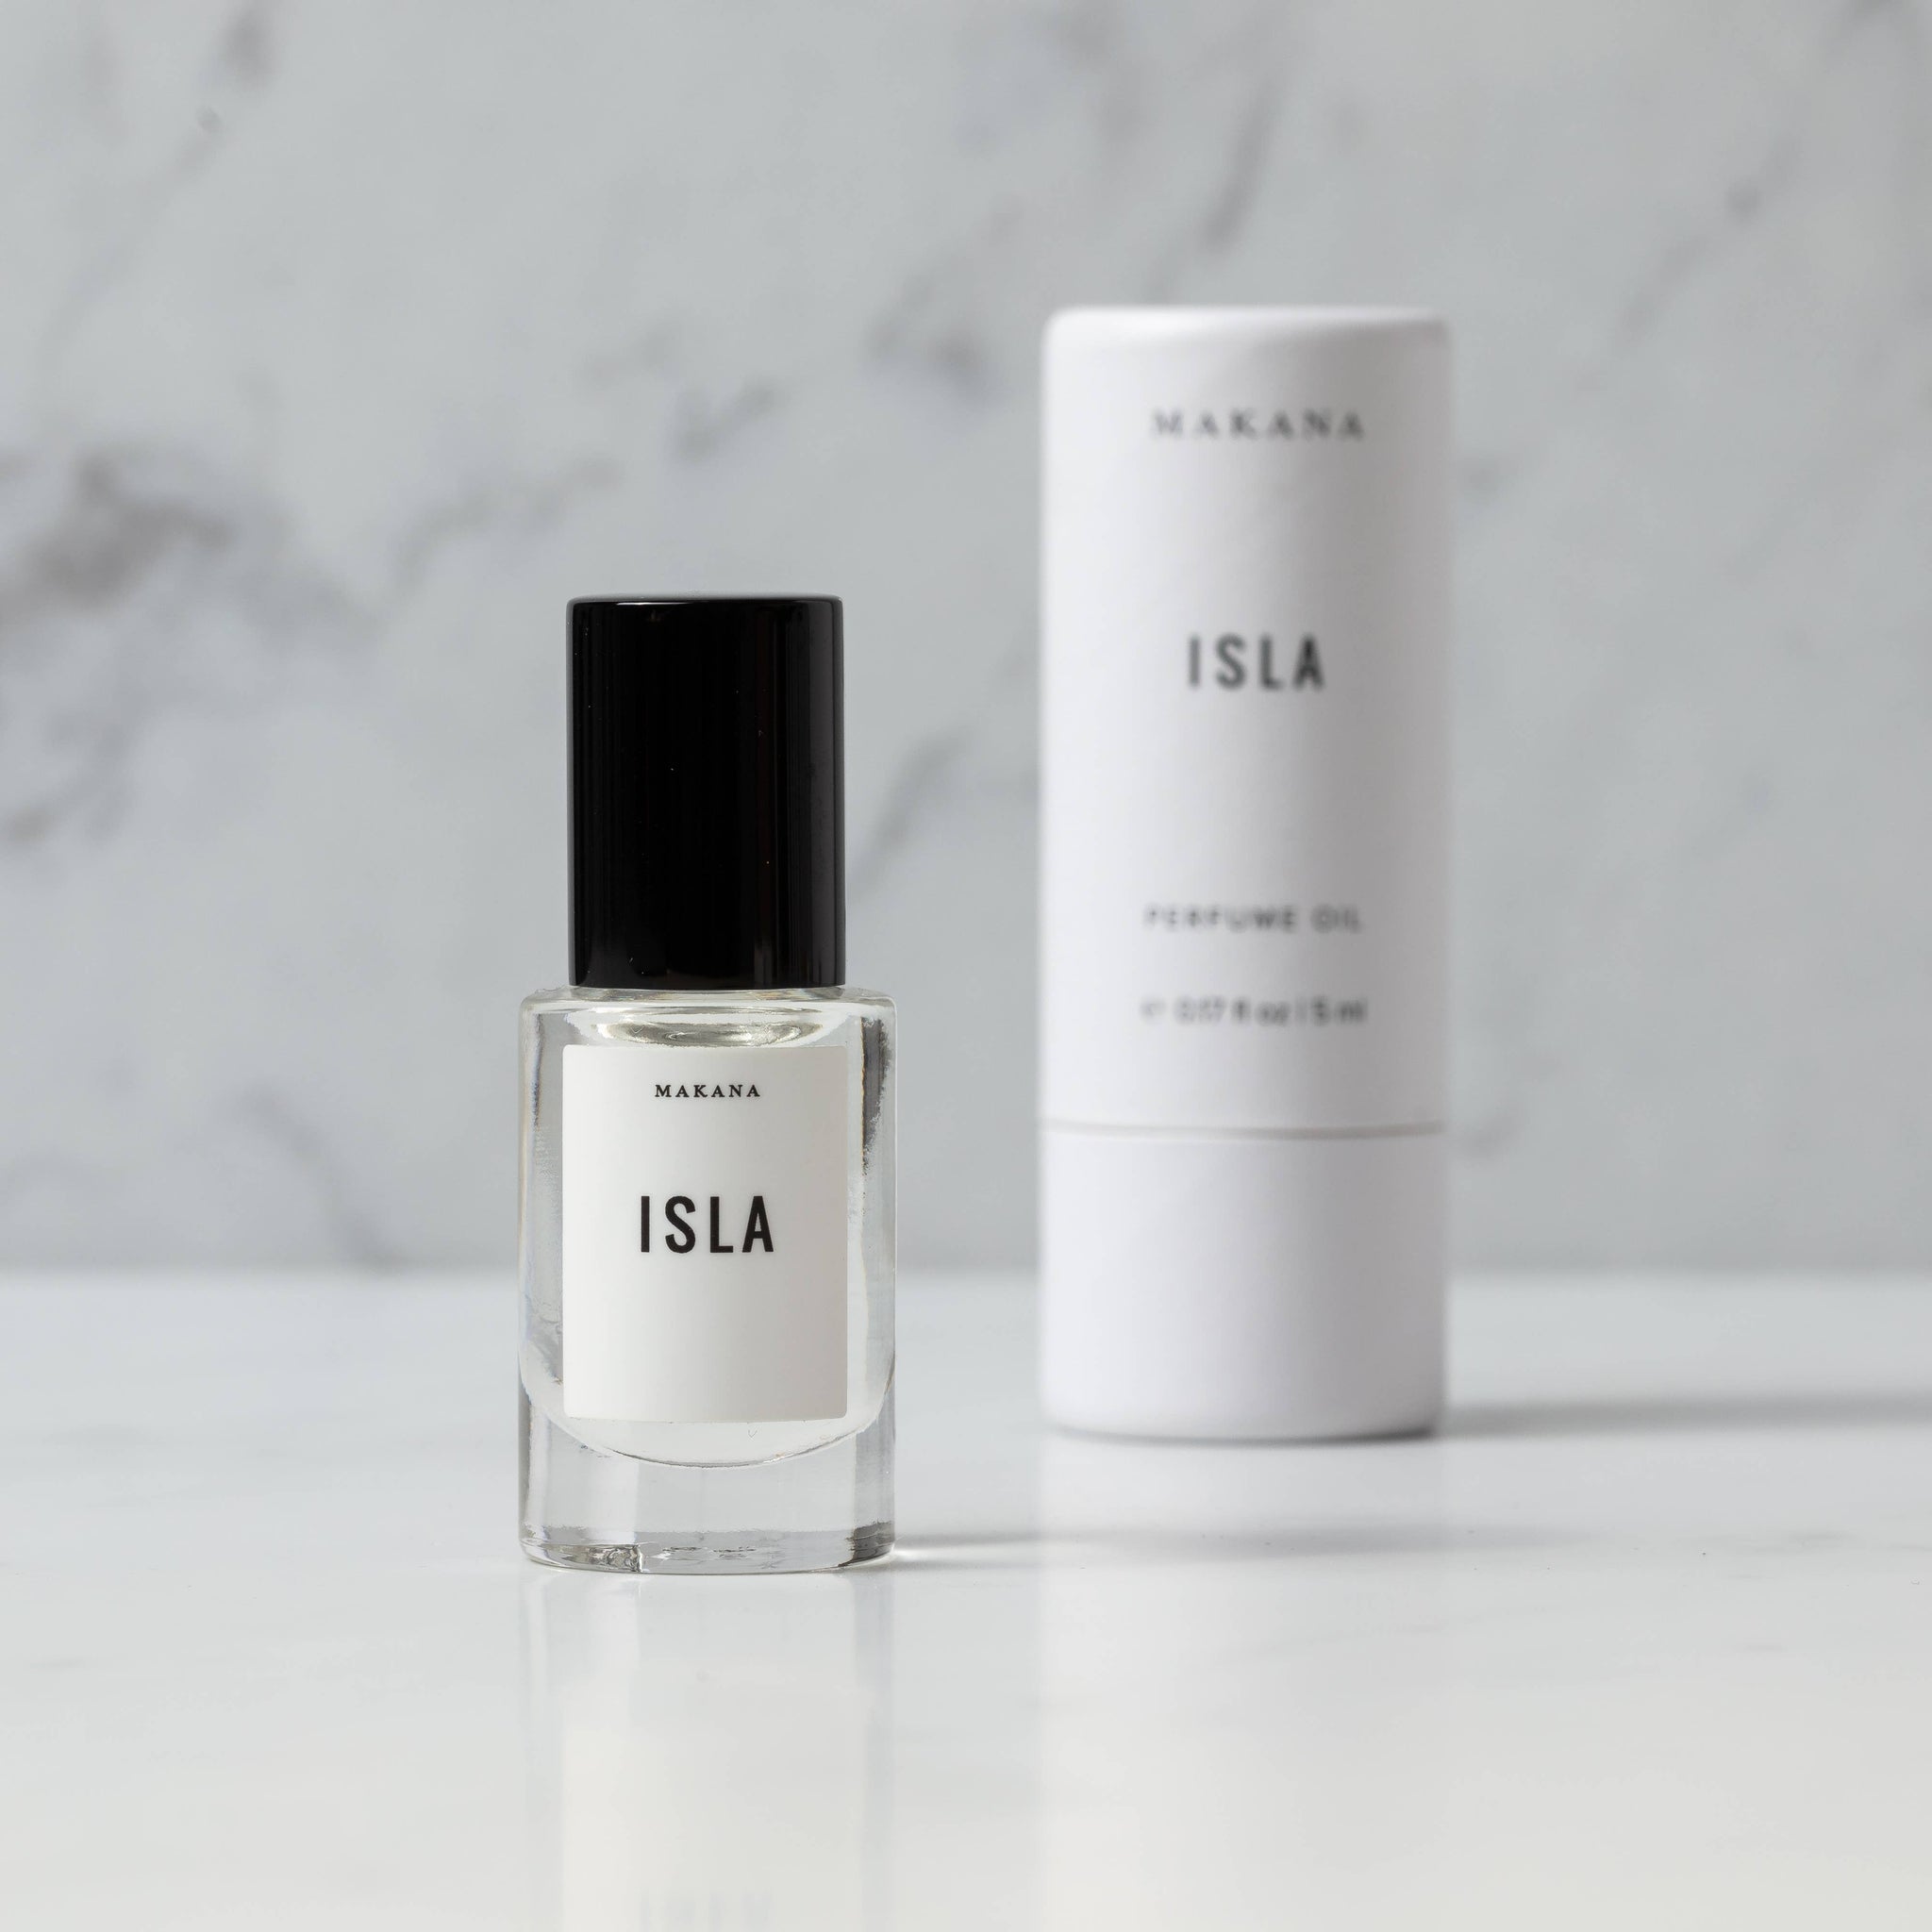 Isla 5ml Perfume Oil